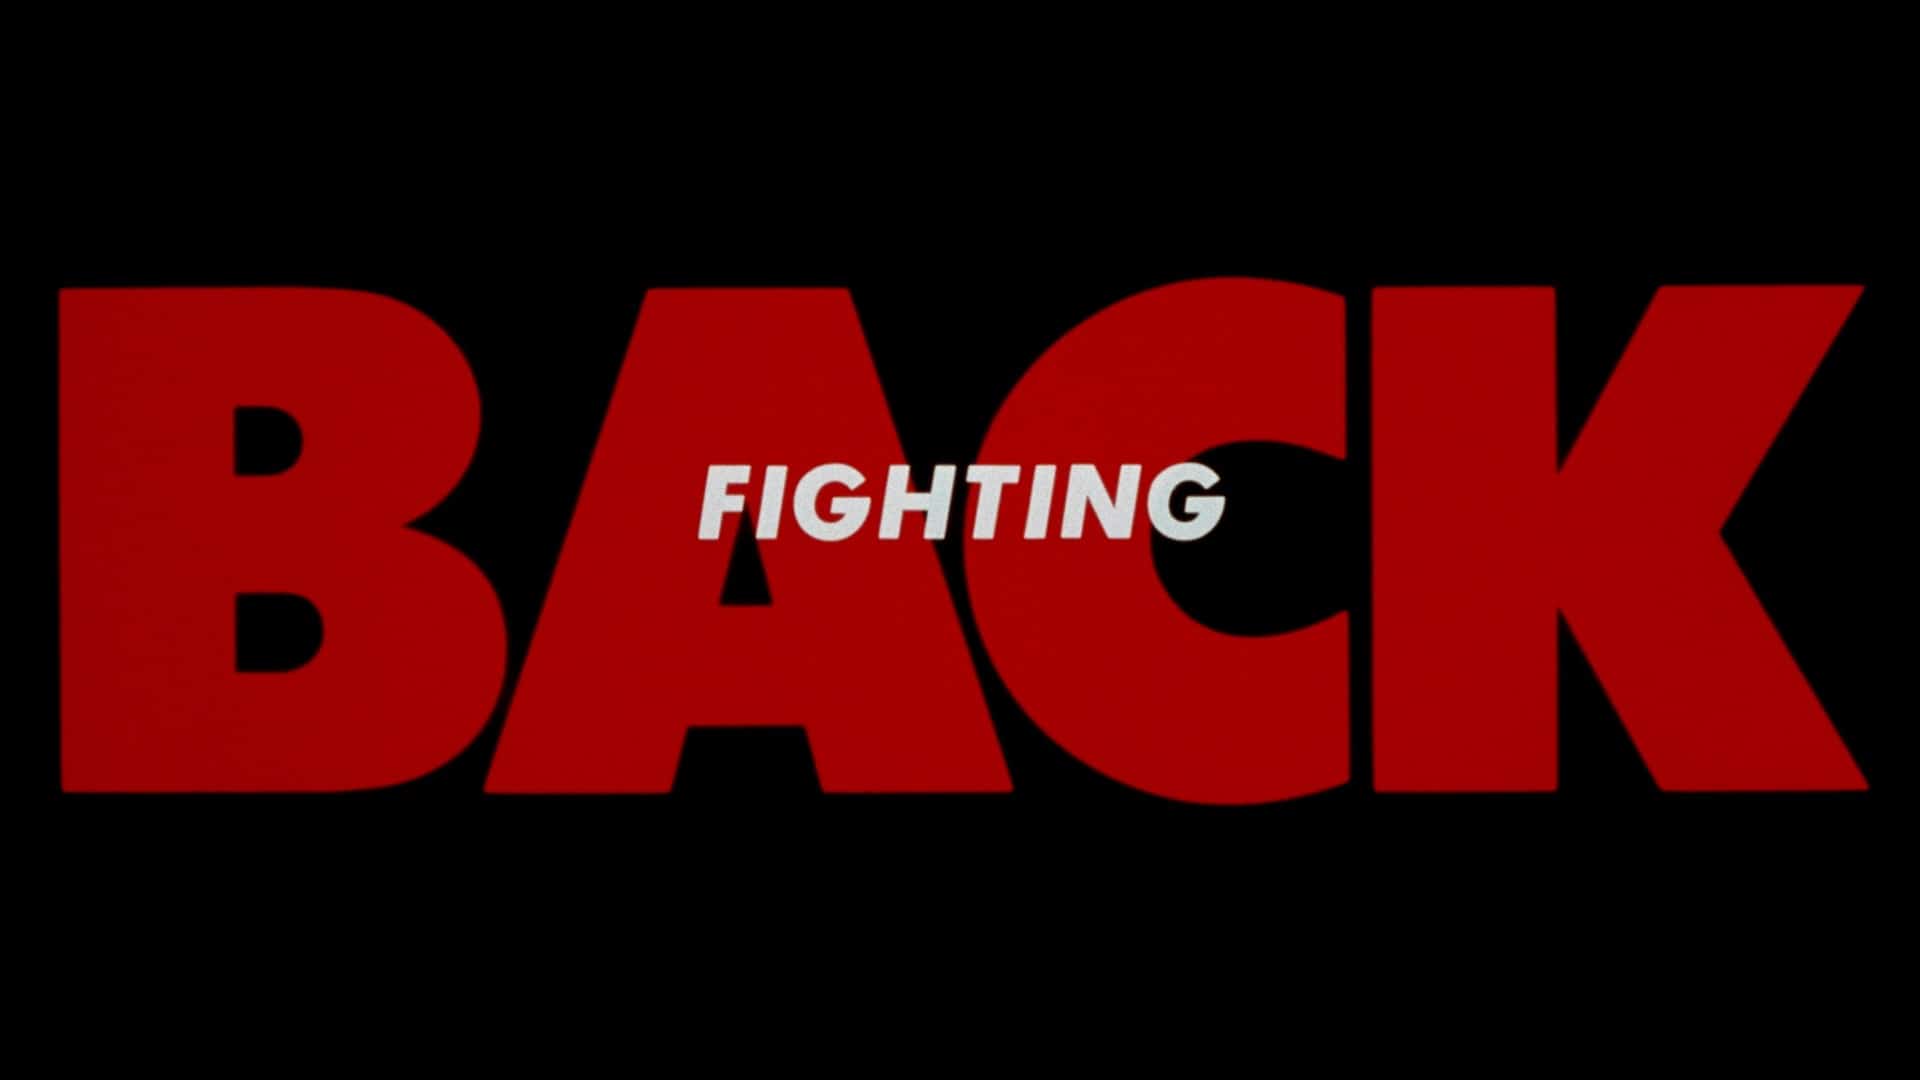 fighting back 1982 blu-ray title arrow films paramount